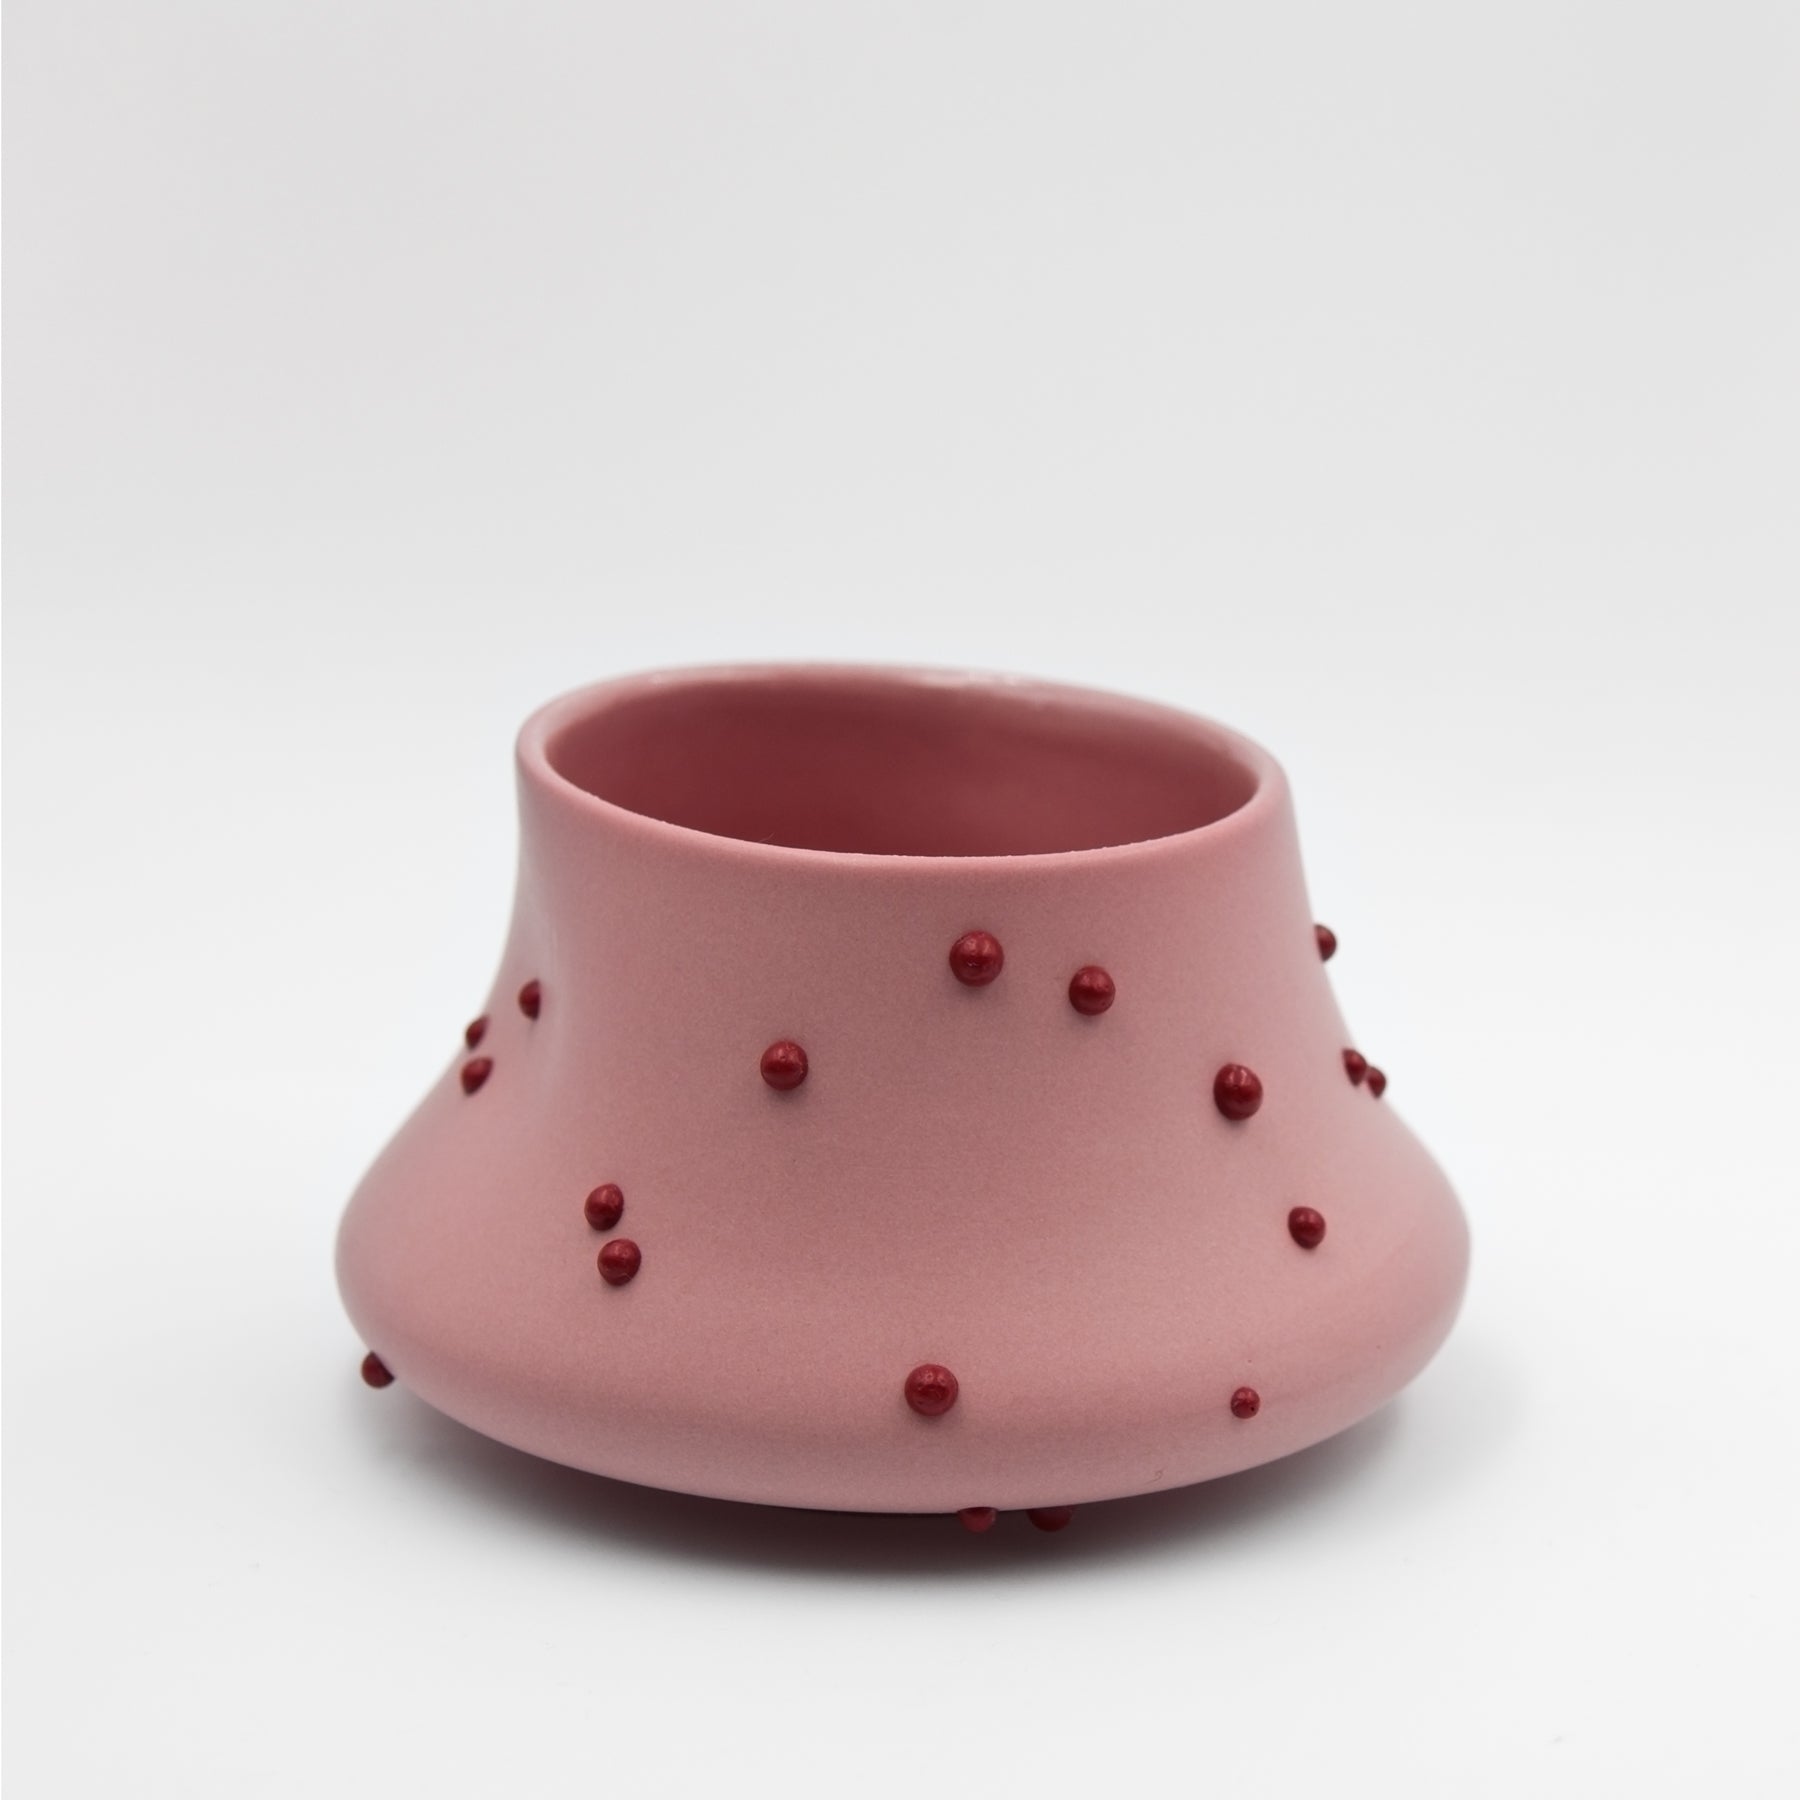 Peckii cup, pink-burgundy